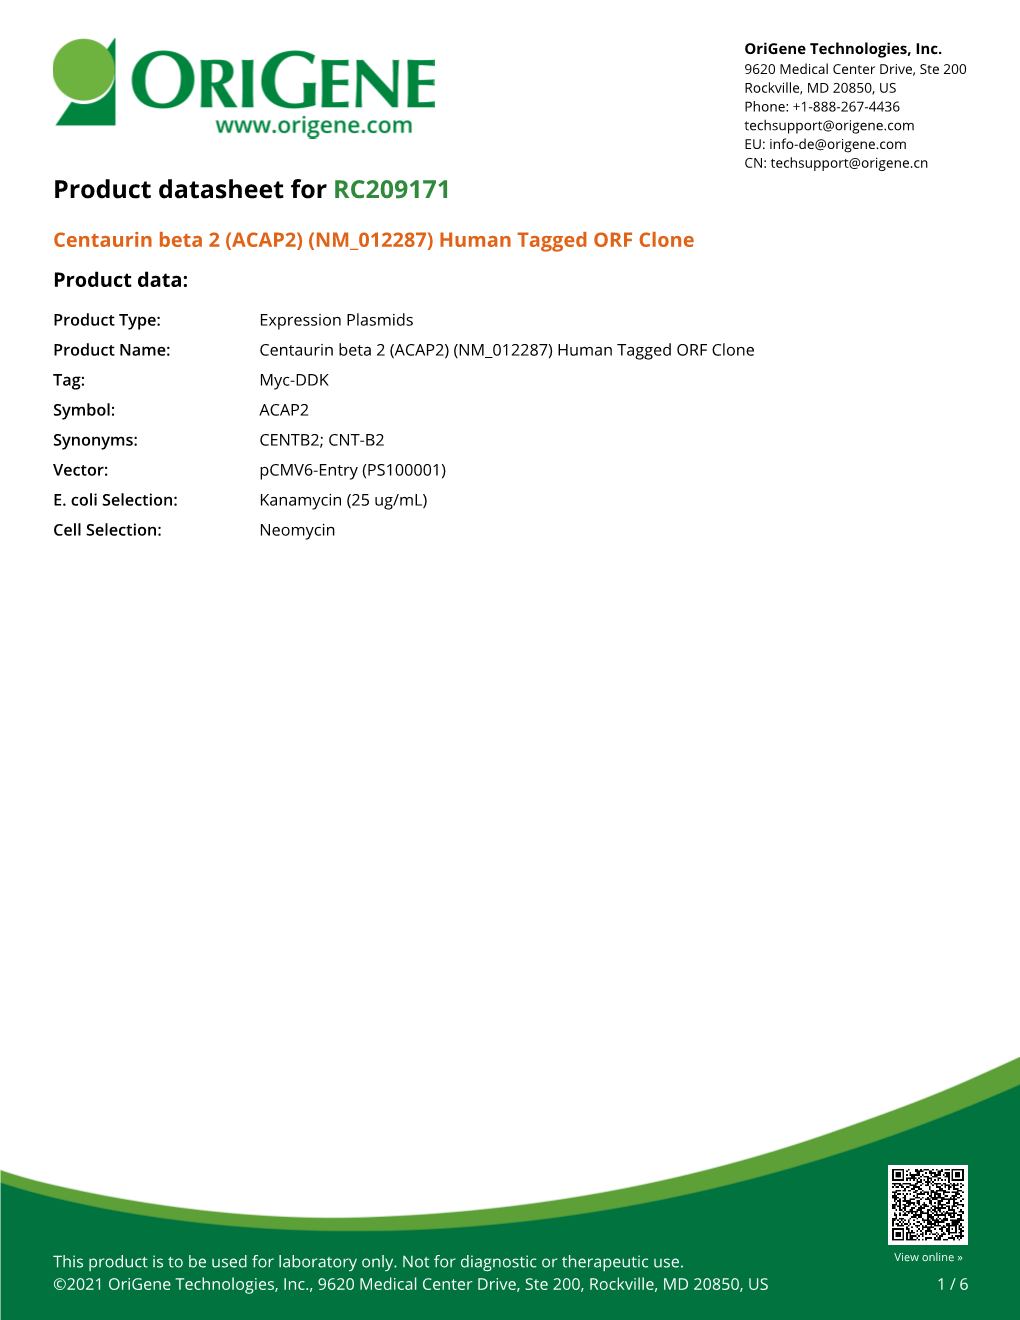 Centaurin Beta 2 (ACAP2) (NM 012287) Human Tagged ORF Clone Product Data